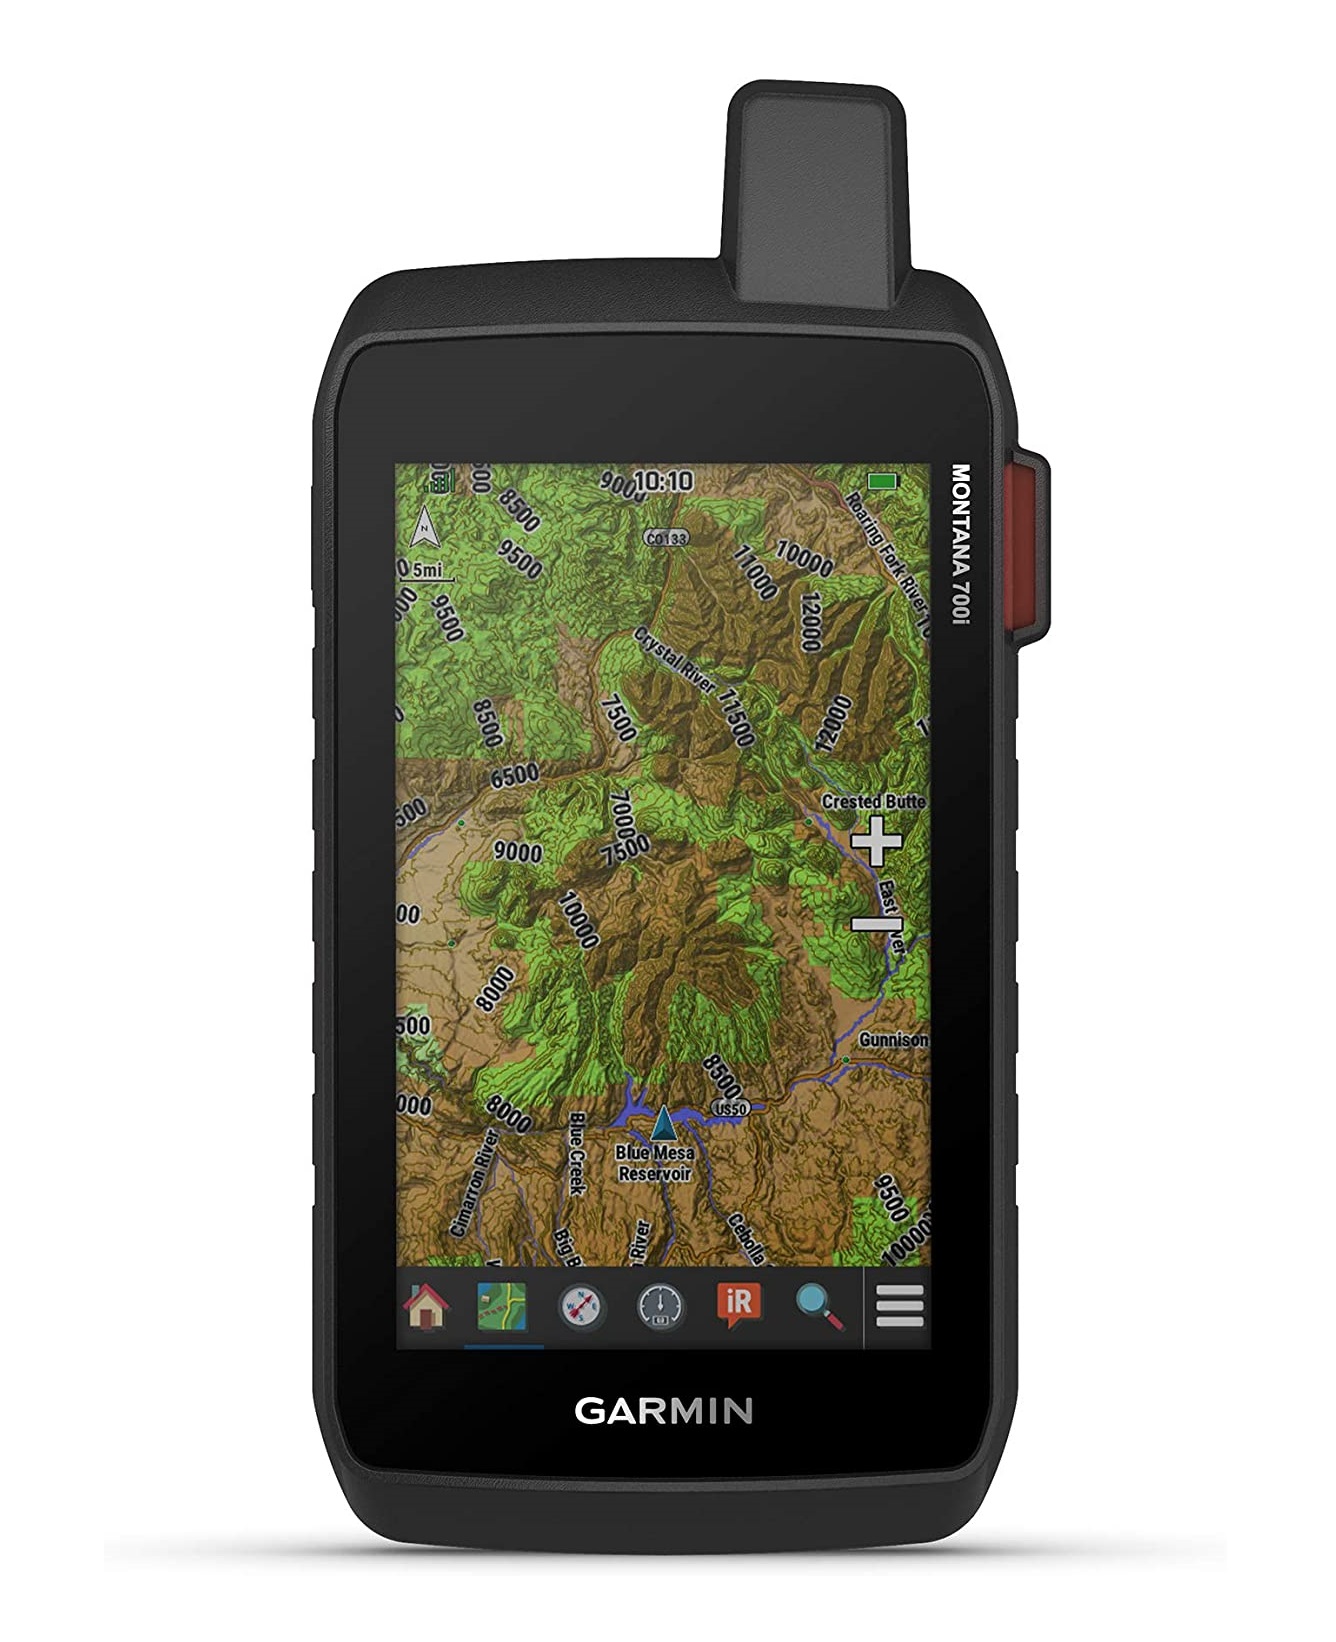 Garmin GPSMAP 66i review